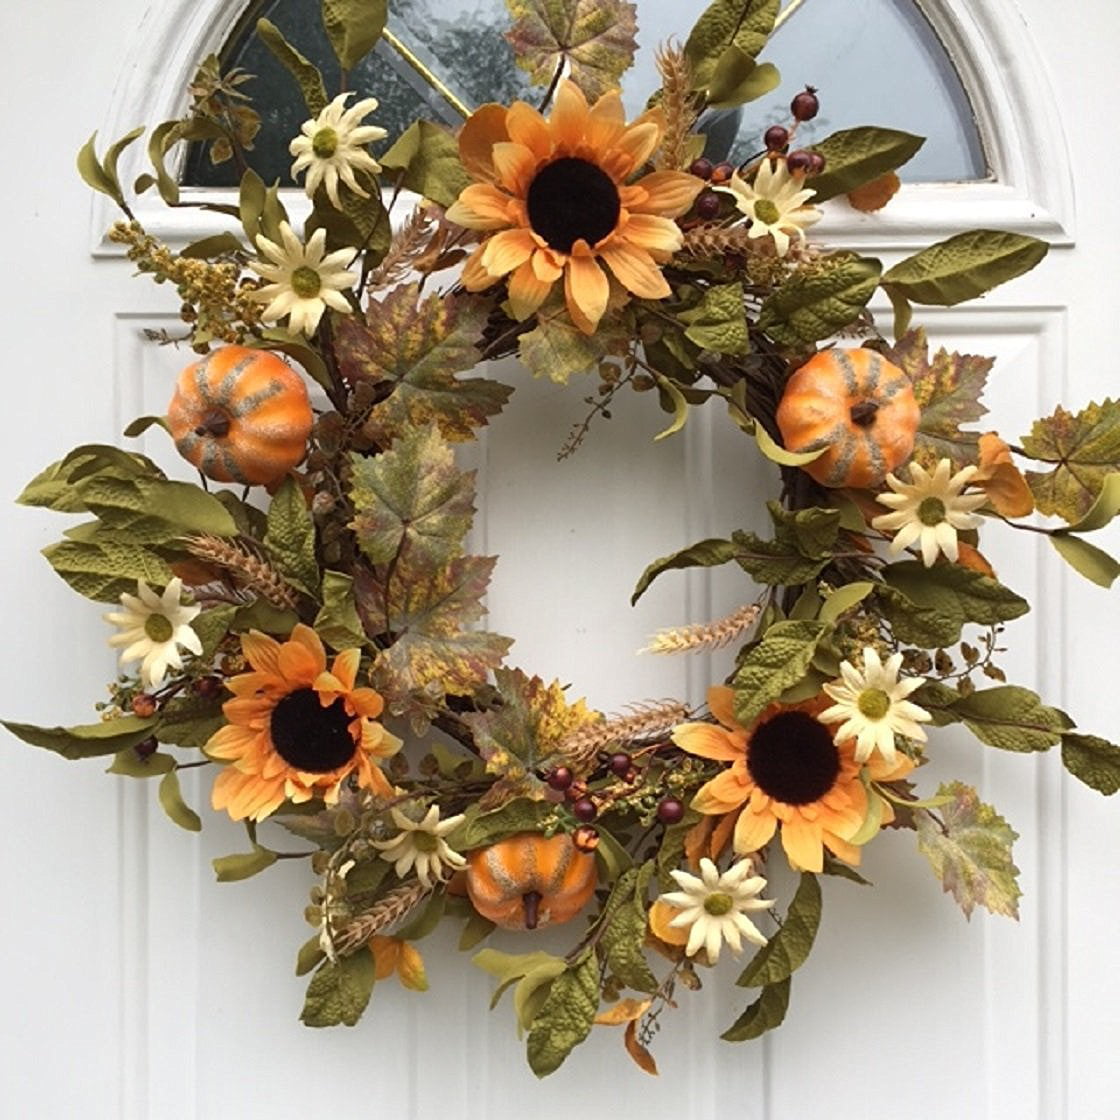 Bibelot 20 inches Fall Wreath Berry Pumpkin Sunflower Daisy Chrysanthemum Flowers Wreath for Front Door Window Autumn Outdoor Indoor Home Decor… 